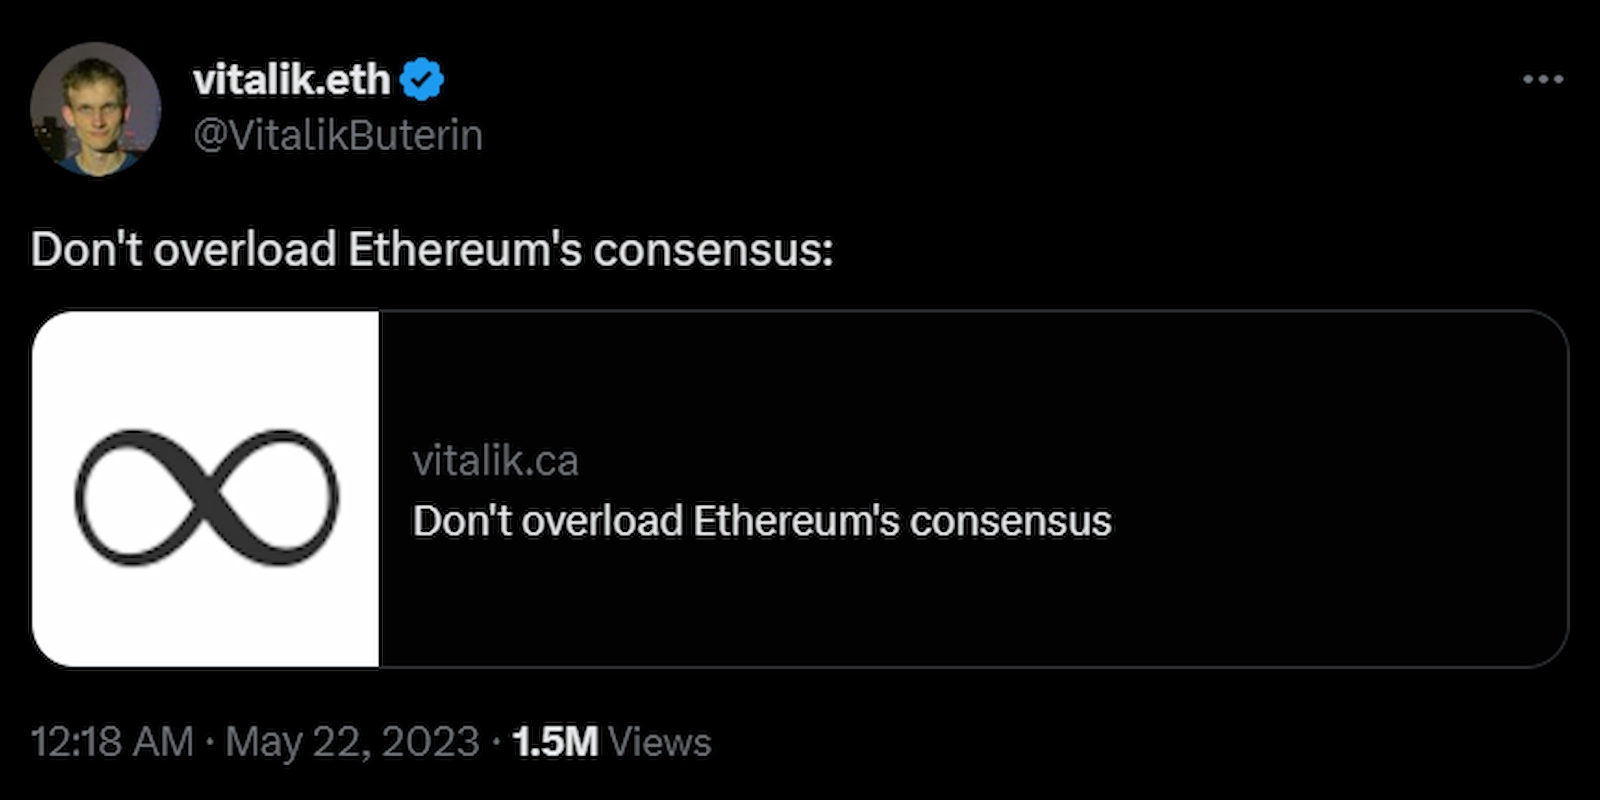 Vitalik Buterin warned that restaking could overload Ethereum's consensus mechanism.